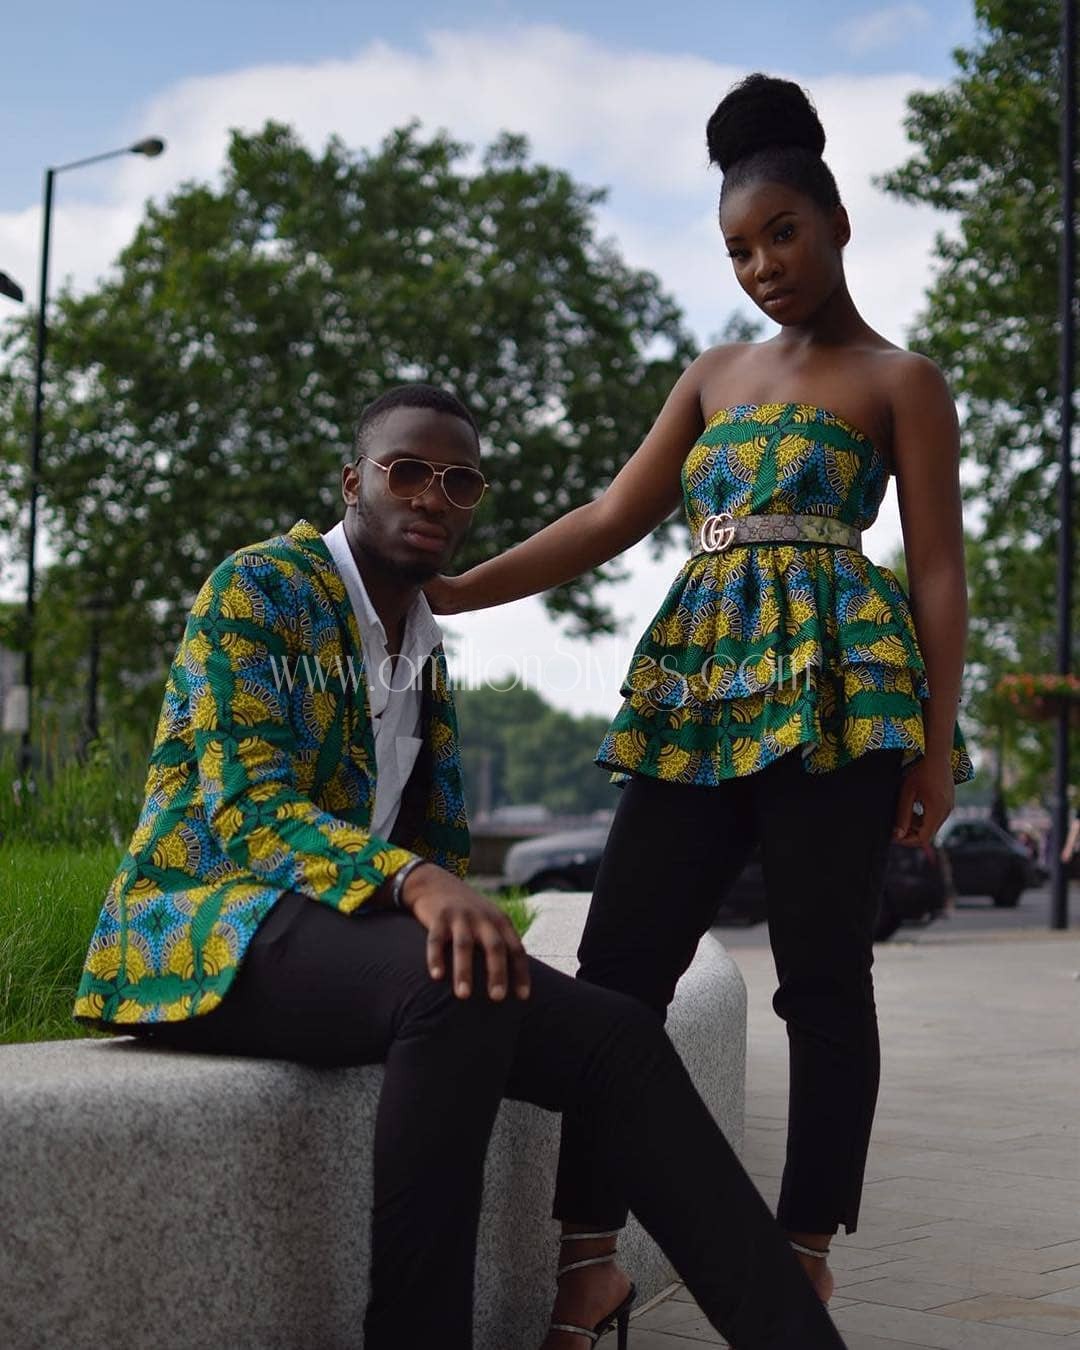 These Fashionable, Stylish Couple Styles Are Goals!